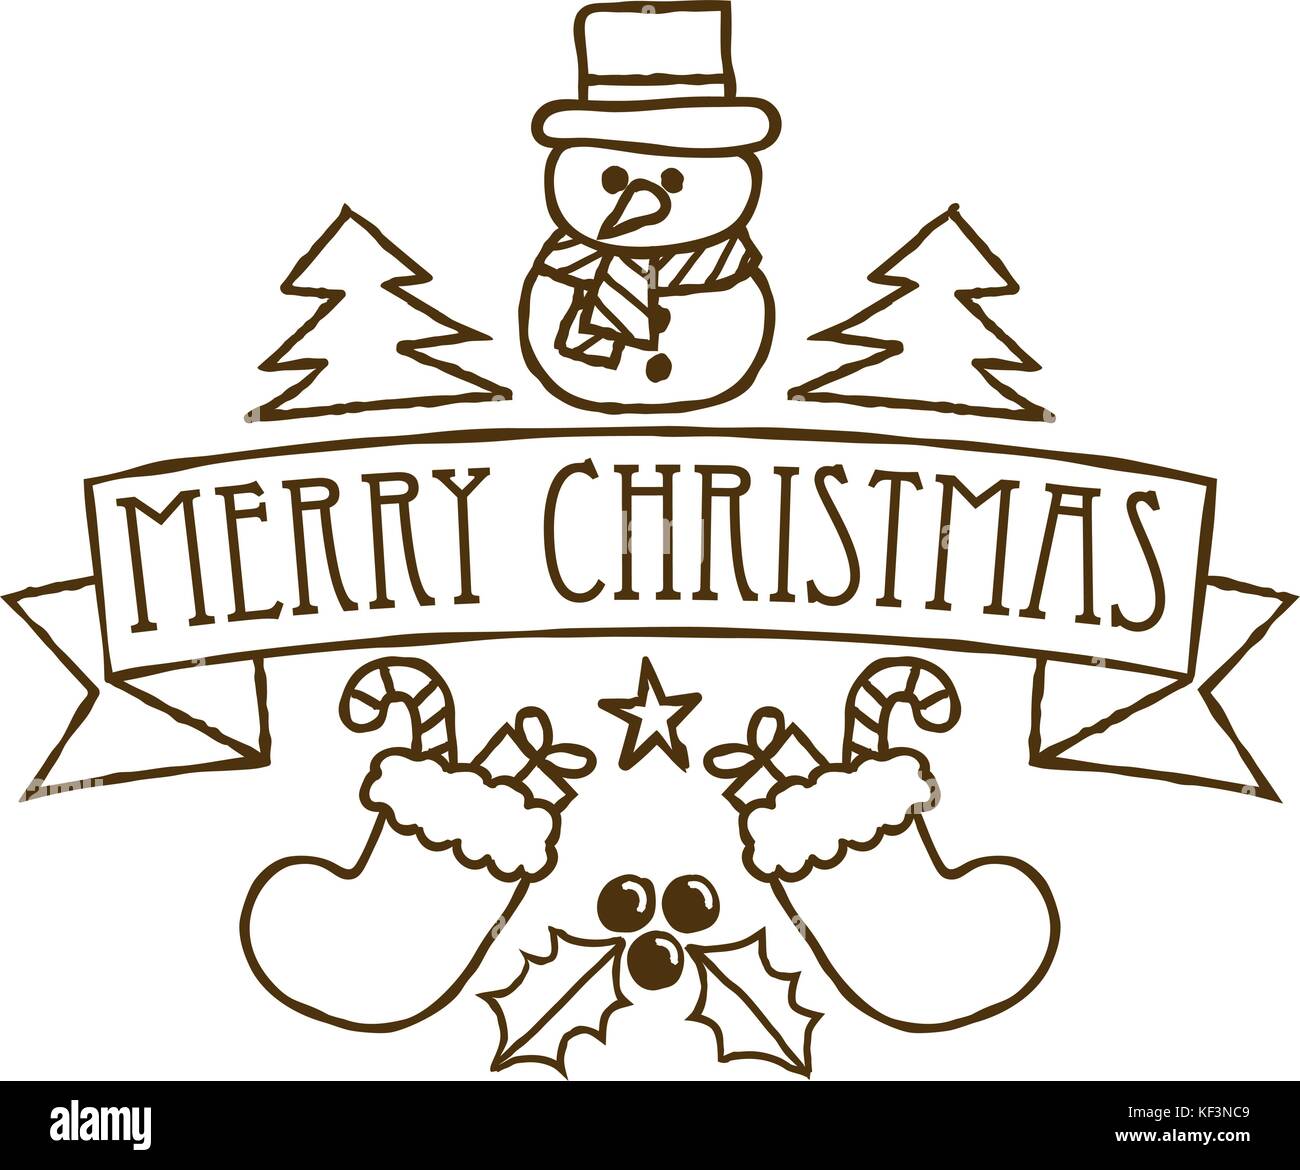 Merry Christmas Greetings Festive Design Stock Vector